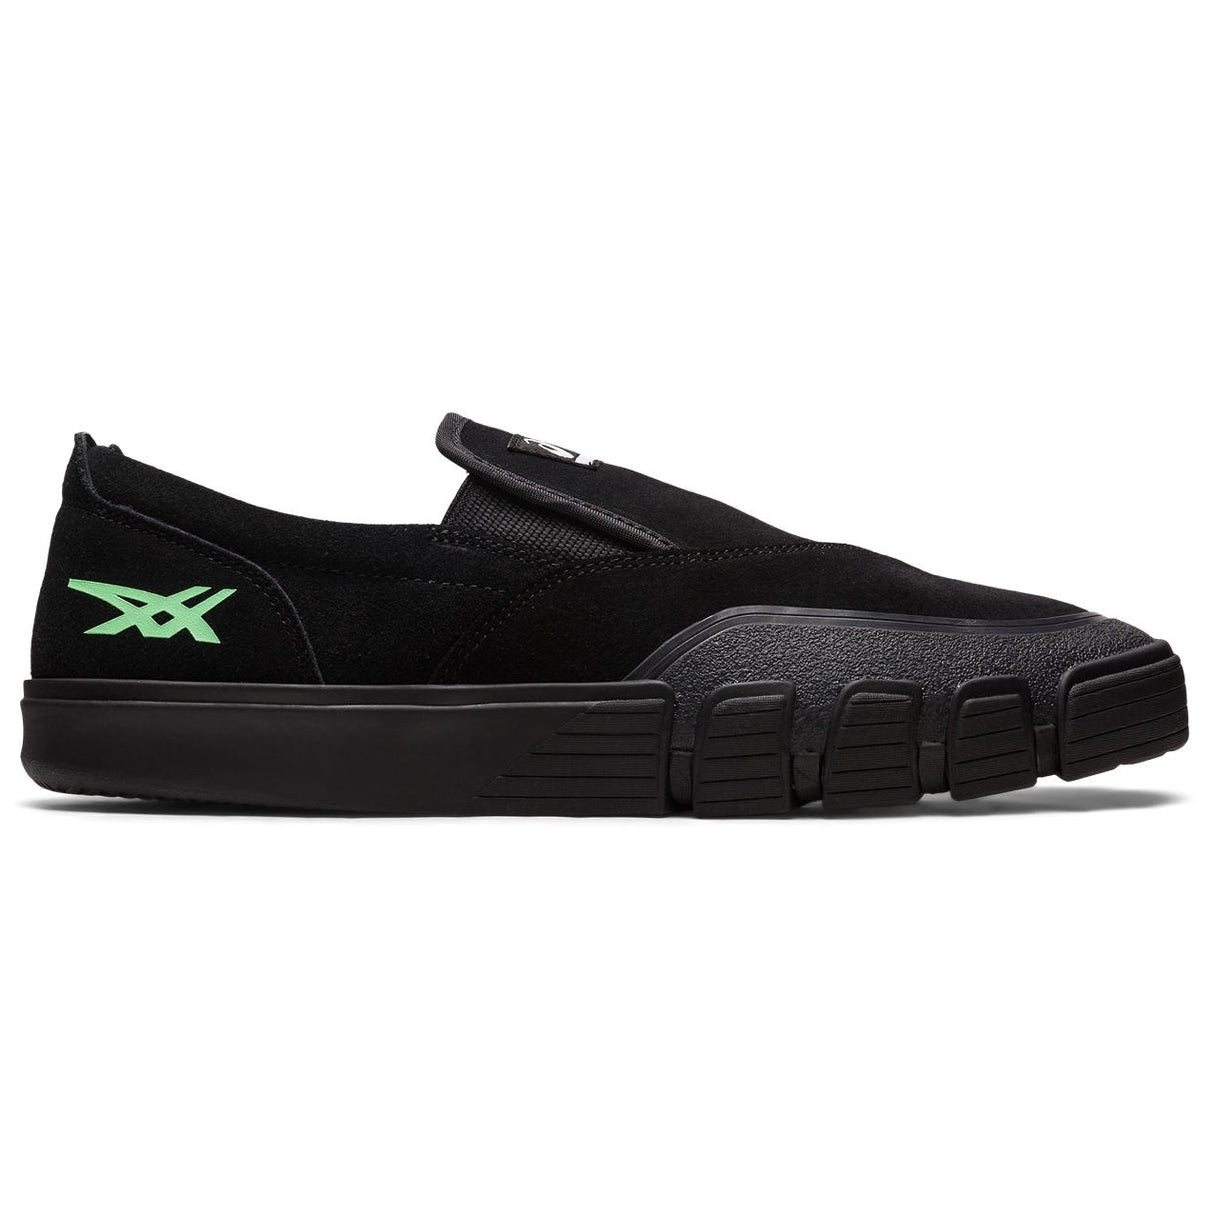 Asics Gel-Flexkee Slip-On Black/Tourmaline Shoes